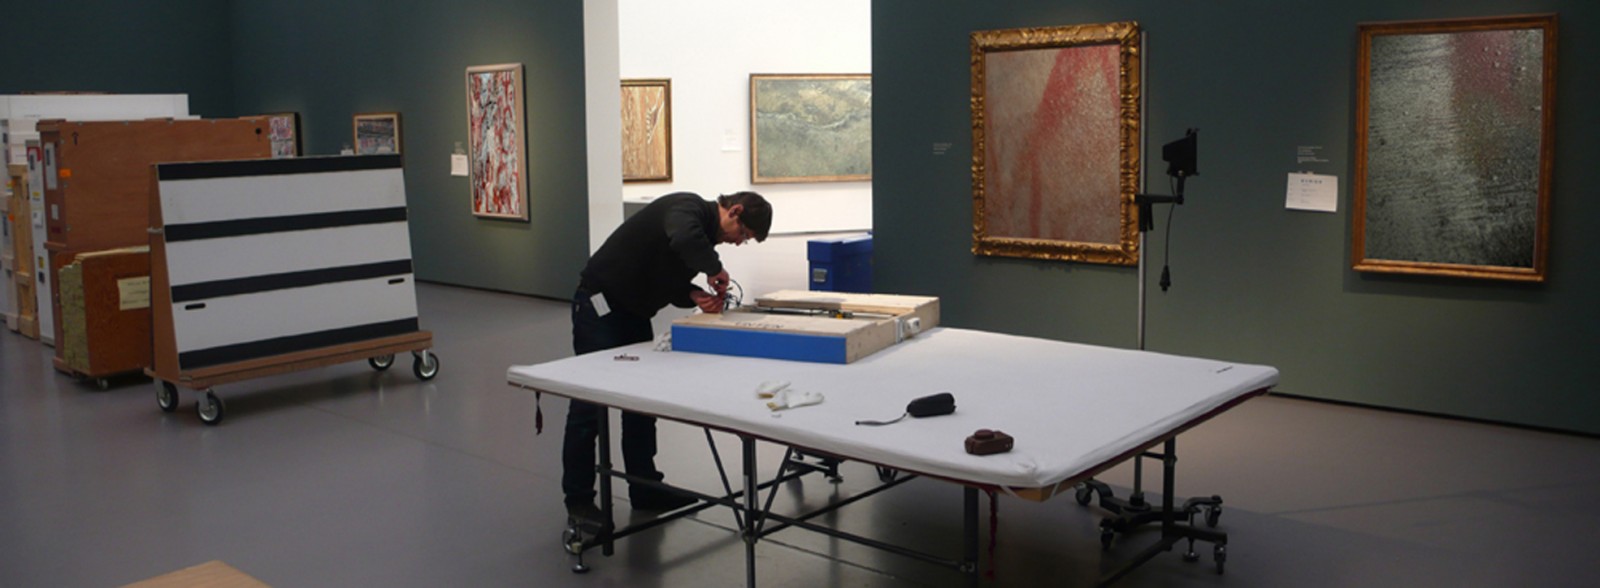 Man packs art painting in museum